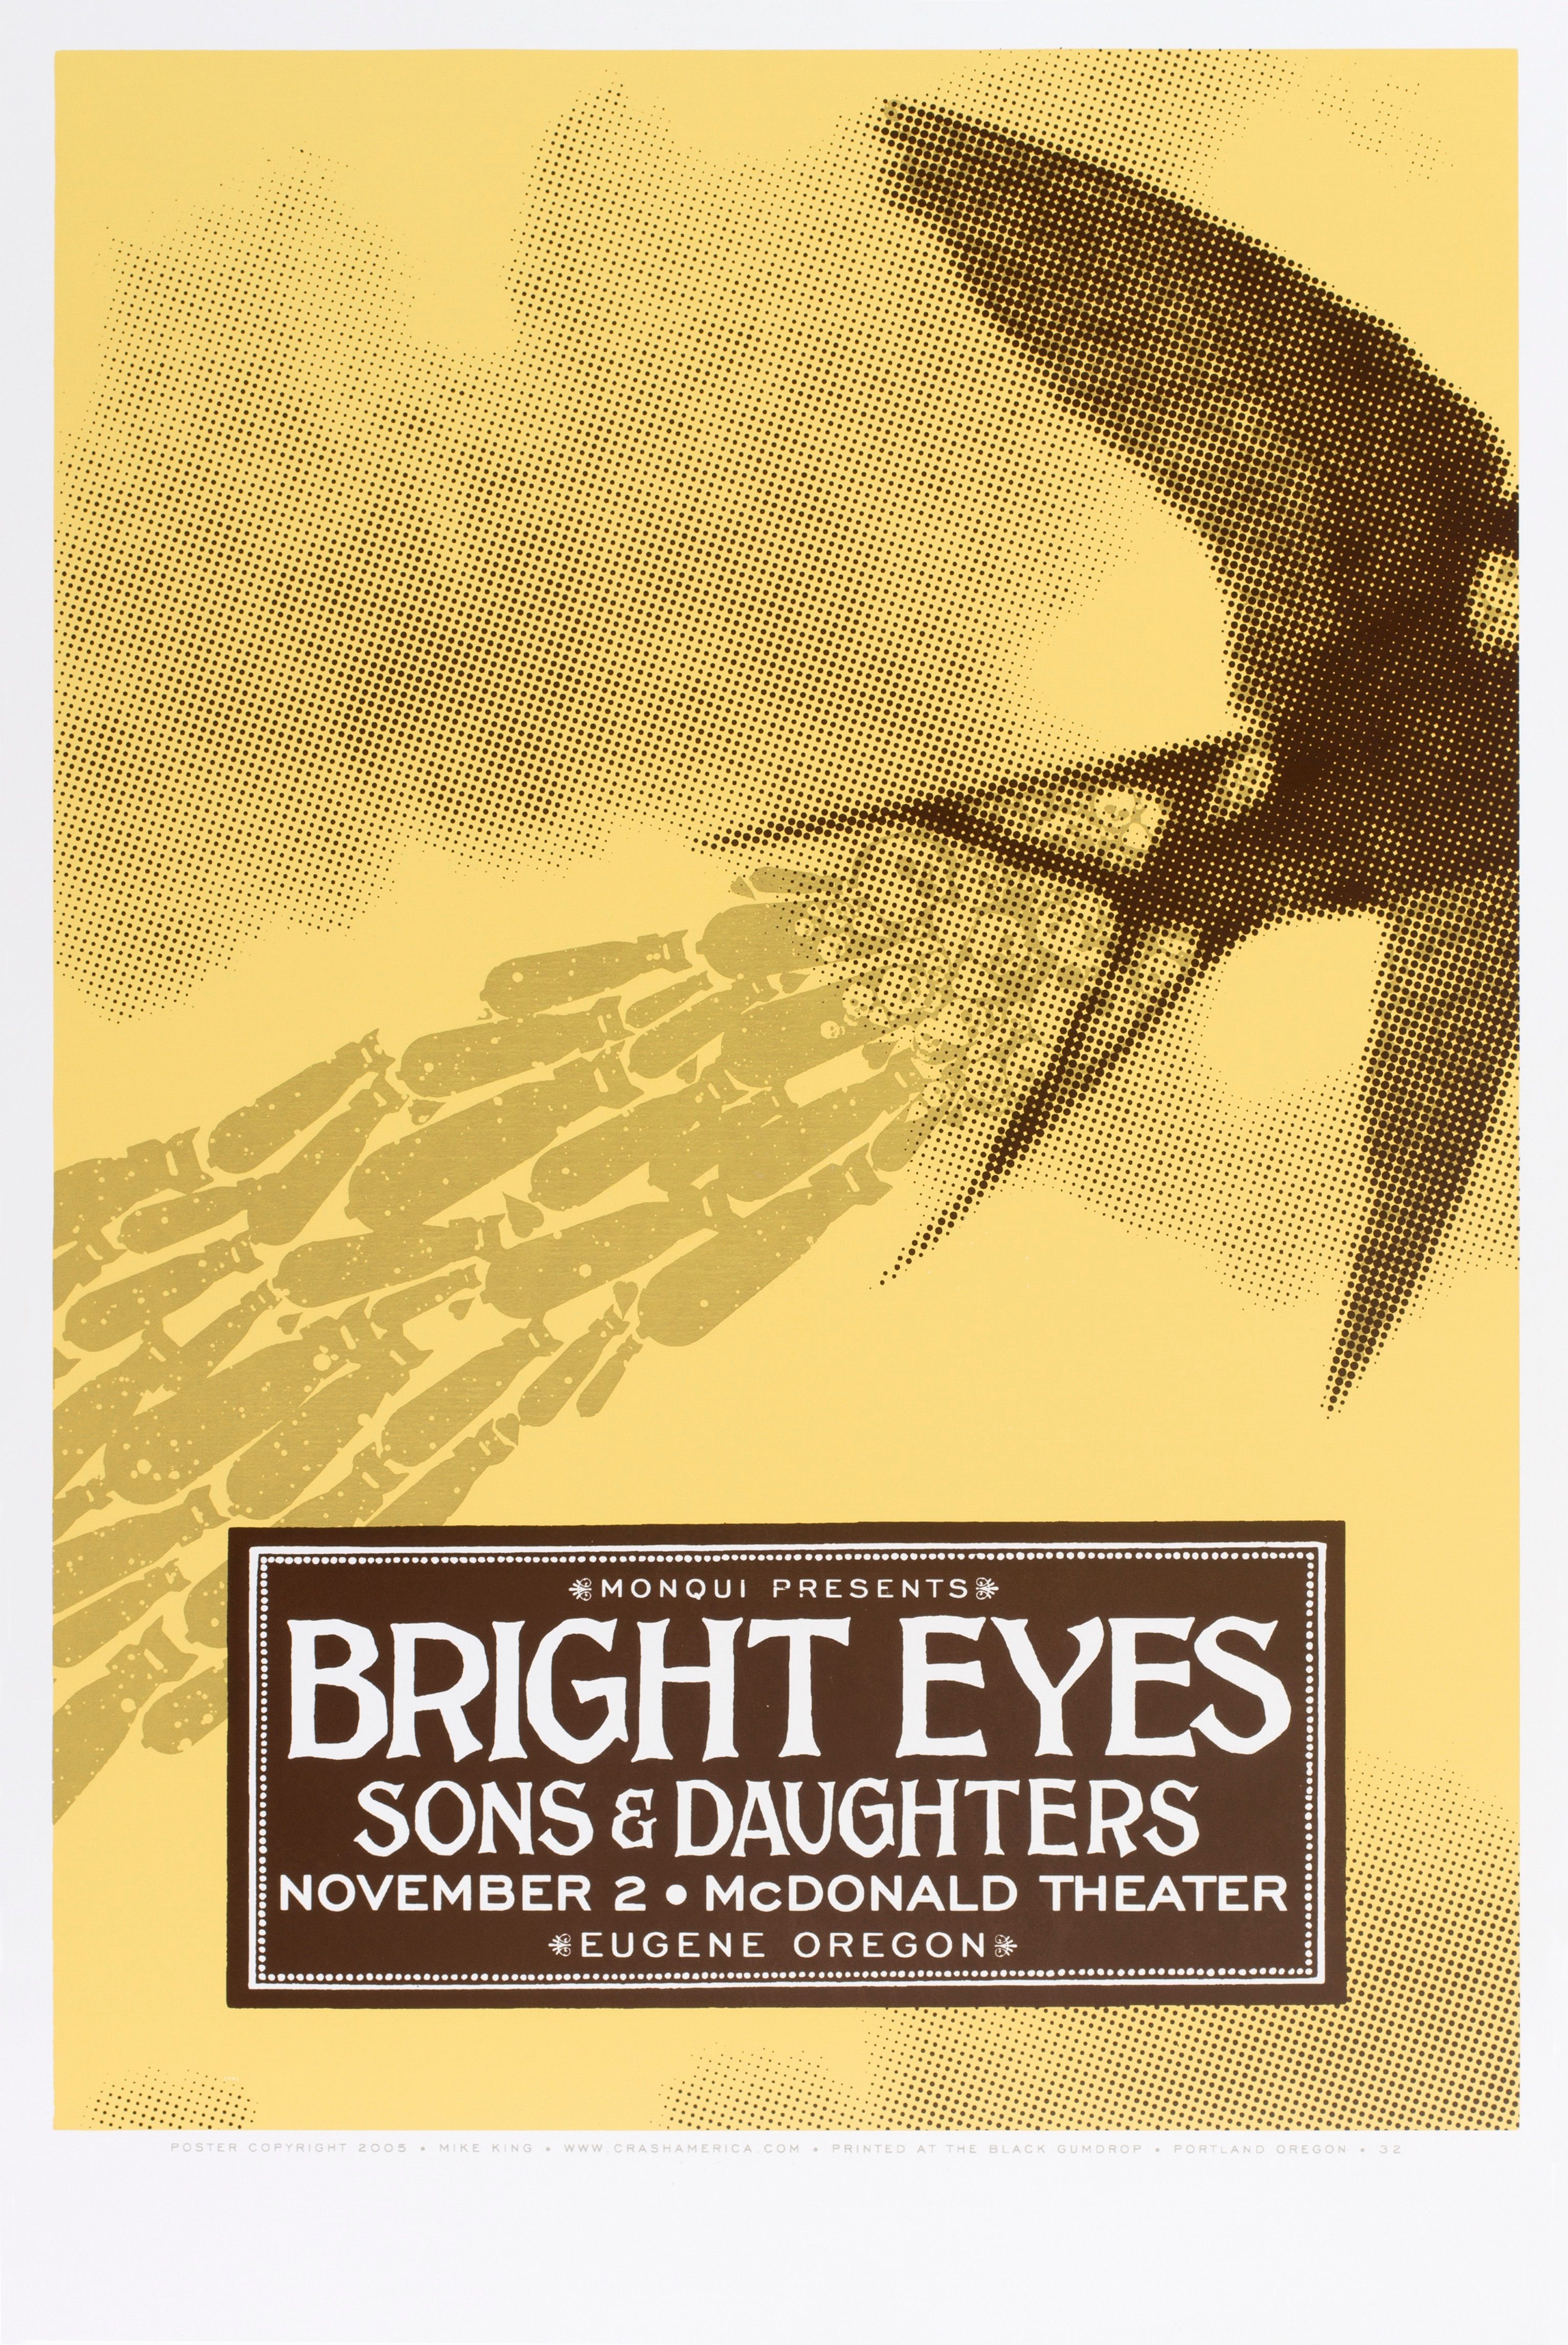 MXP-104.4 Bright Eyes 2001 Mcdonald Theater  Nov 26 Concert Poster